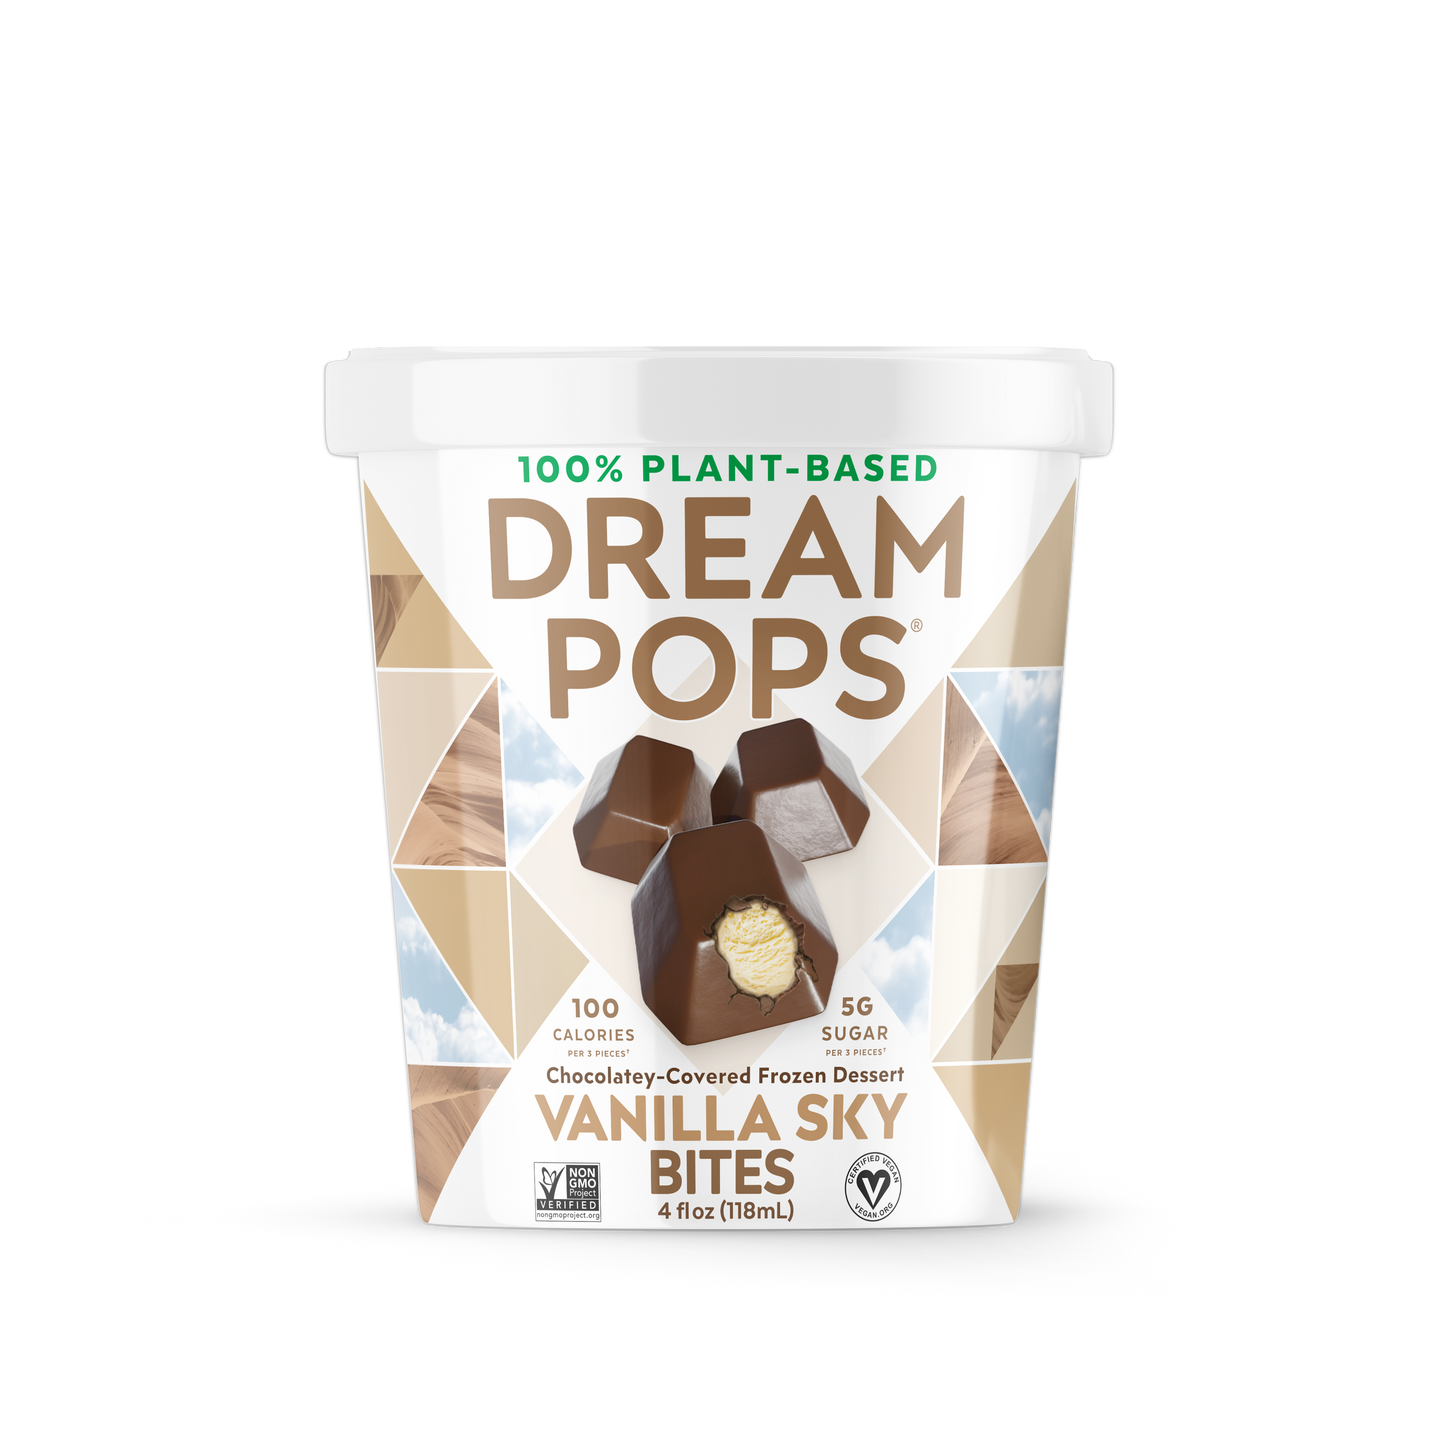 Dream Pops Bites - Vanilla Sky